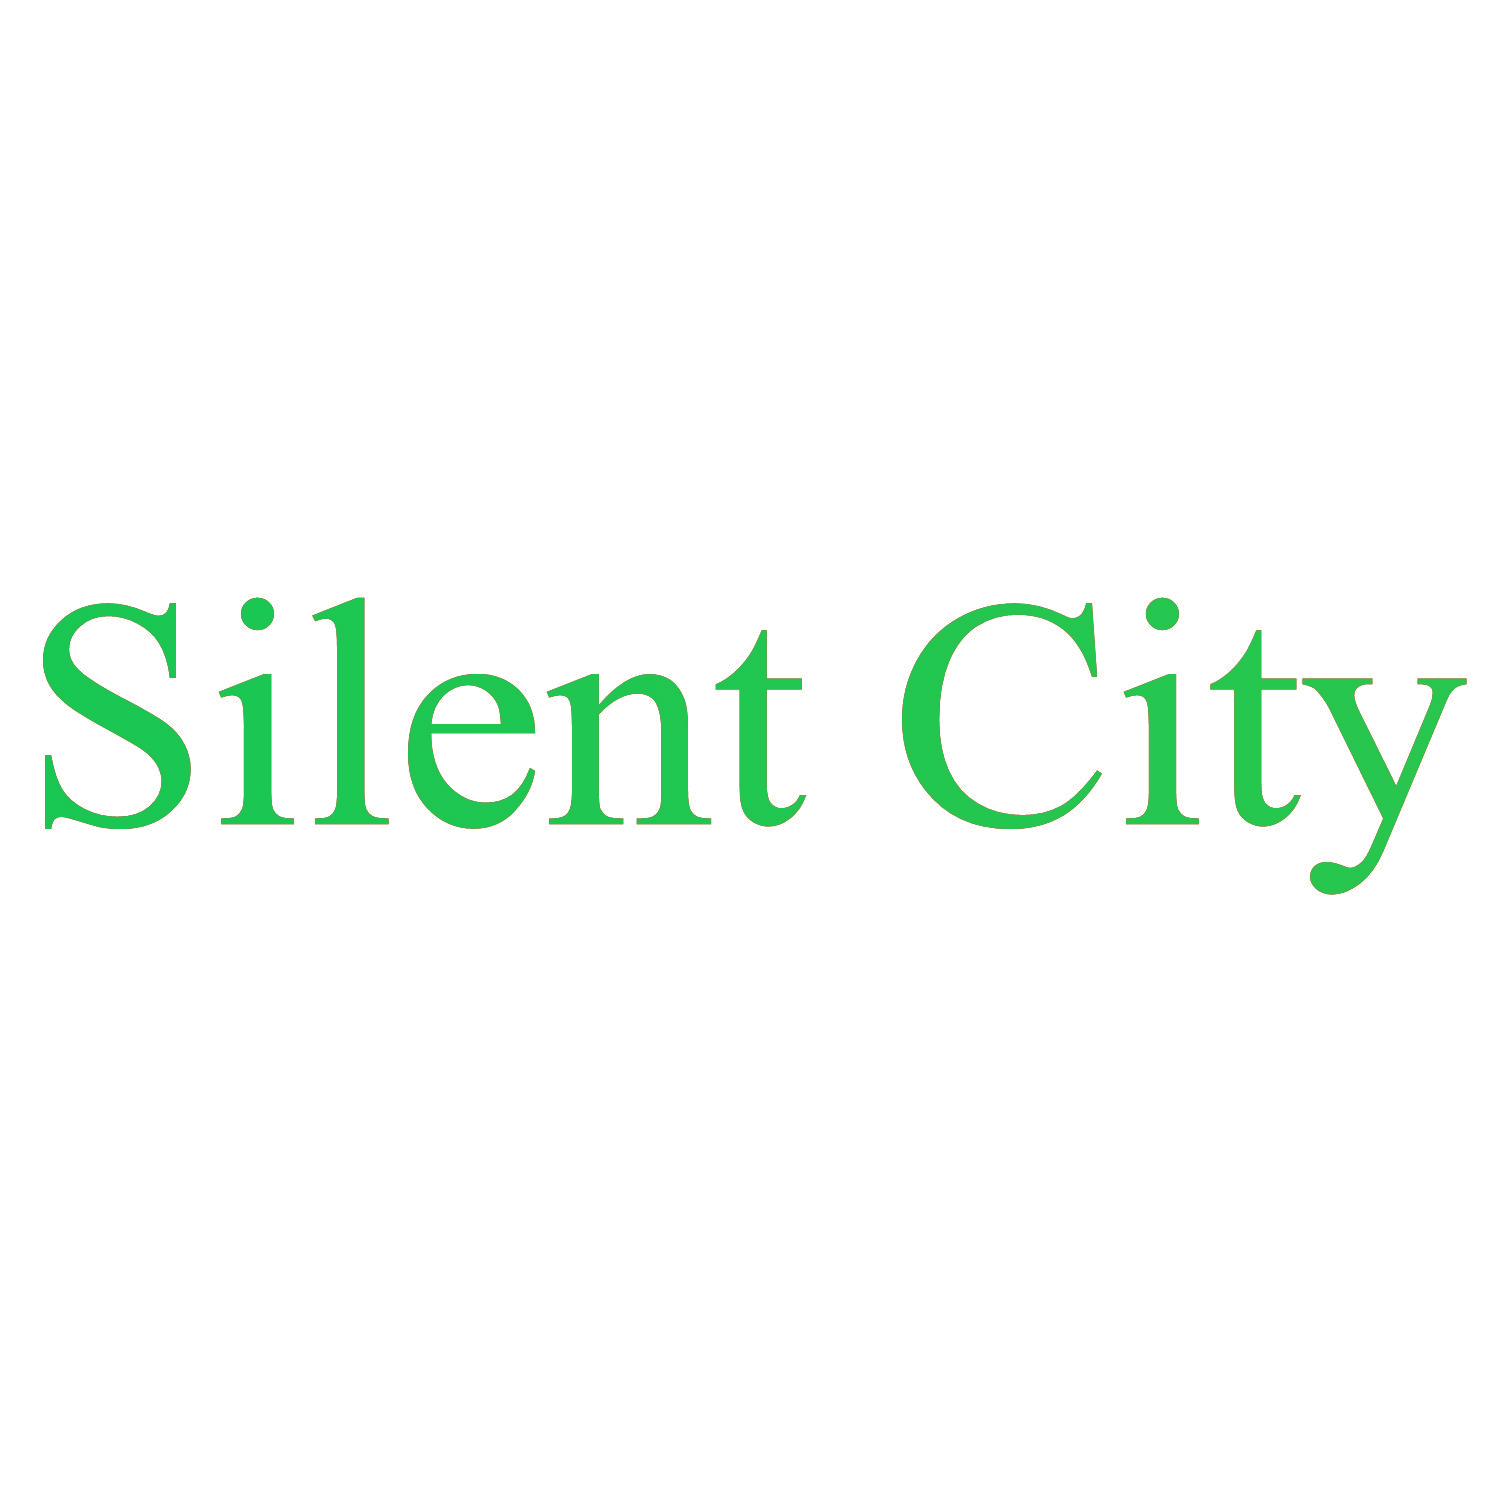 SILENT CITY